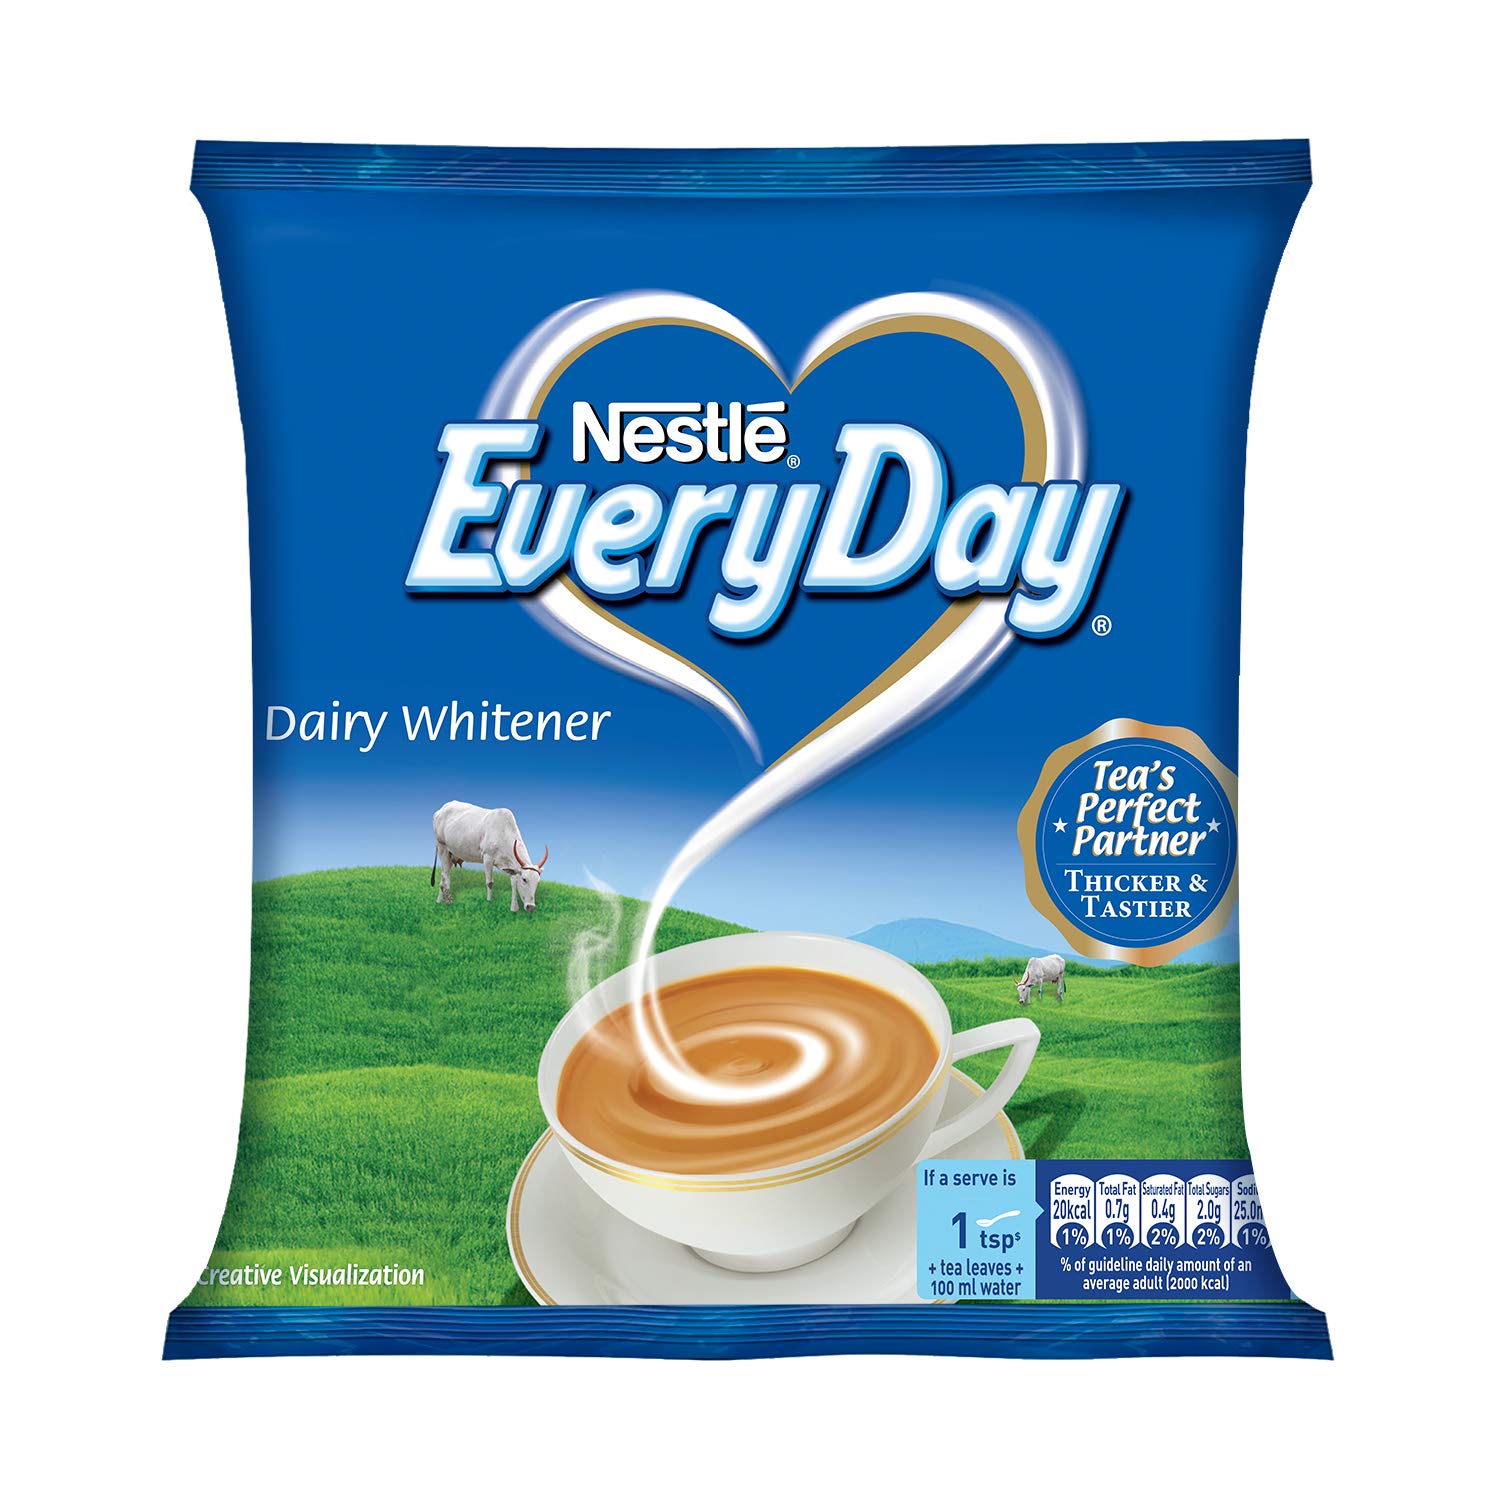 Nestle Everyday Dairy Whitener, Milk Powder for Tea